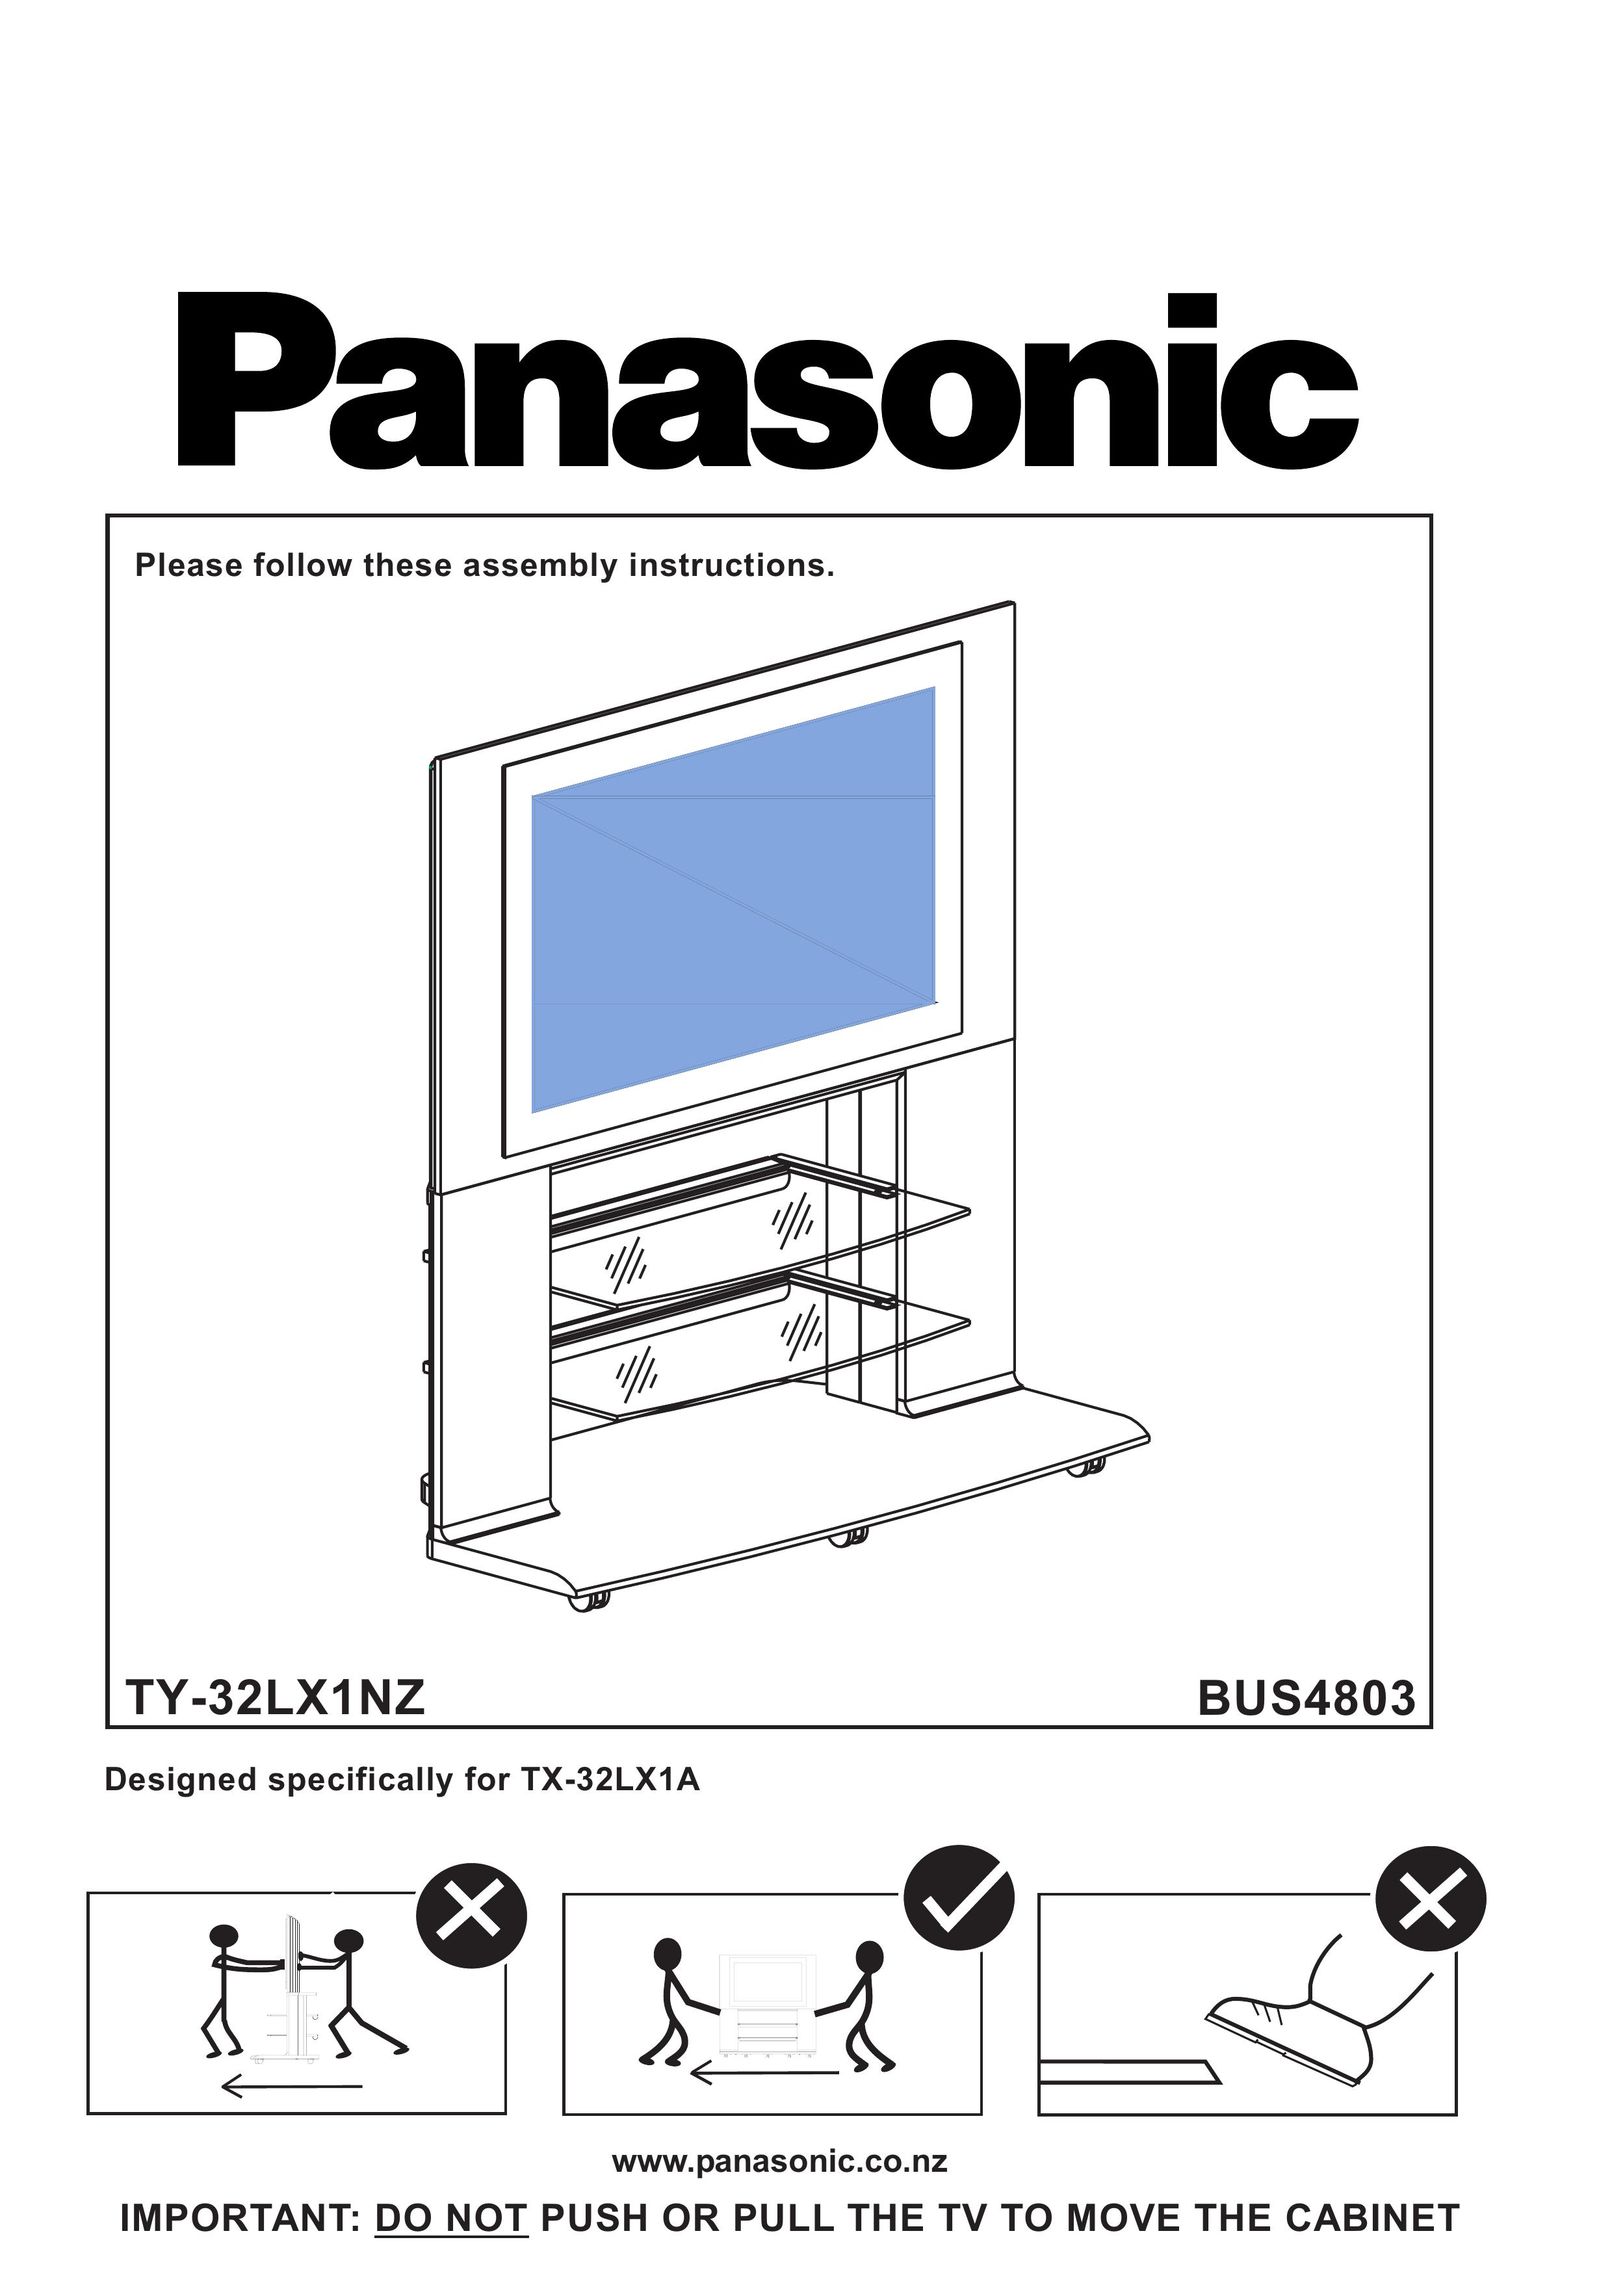 Panasonic BUS4803 Flat Panel Television User Manual